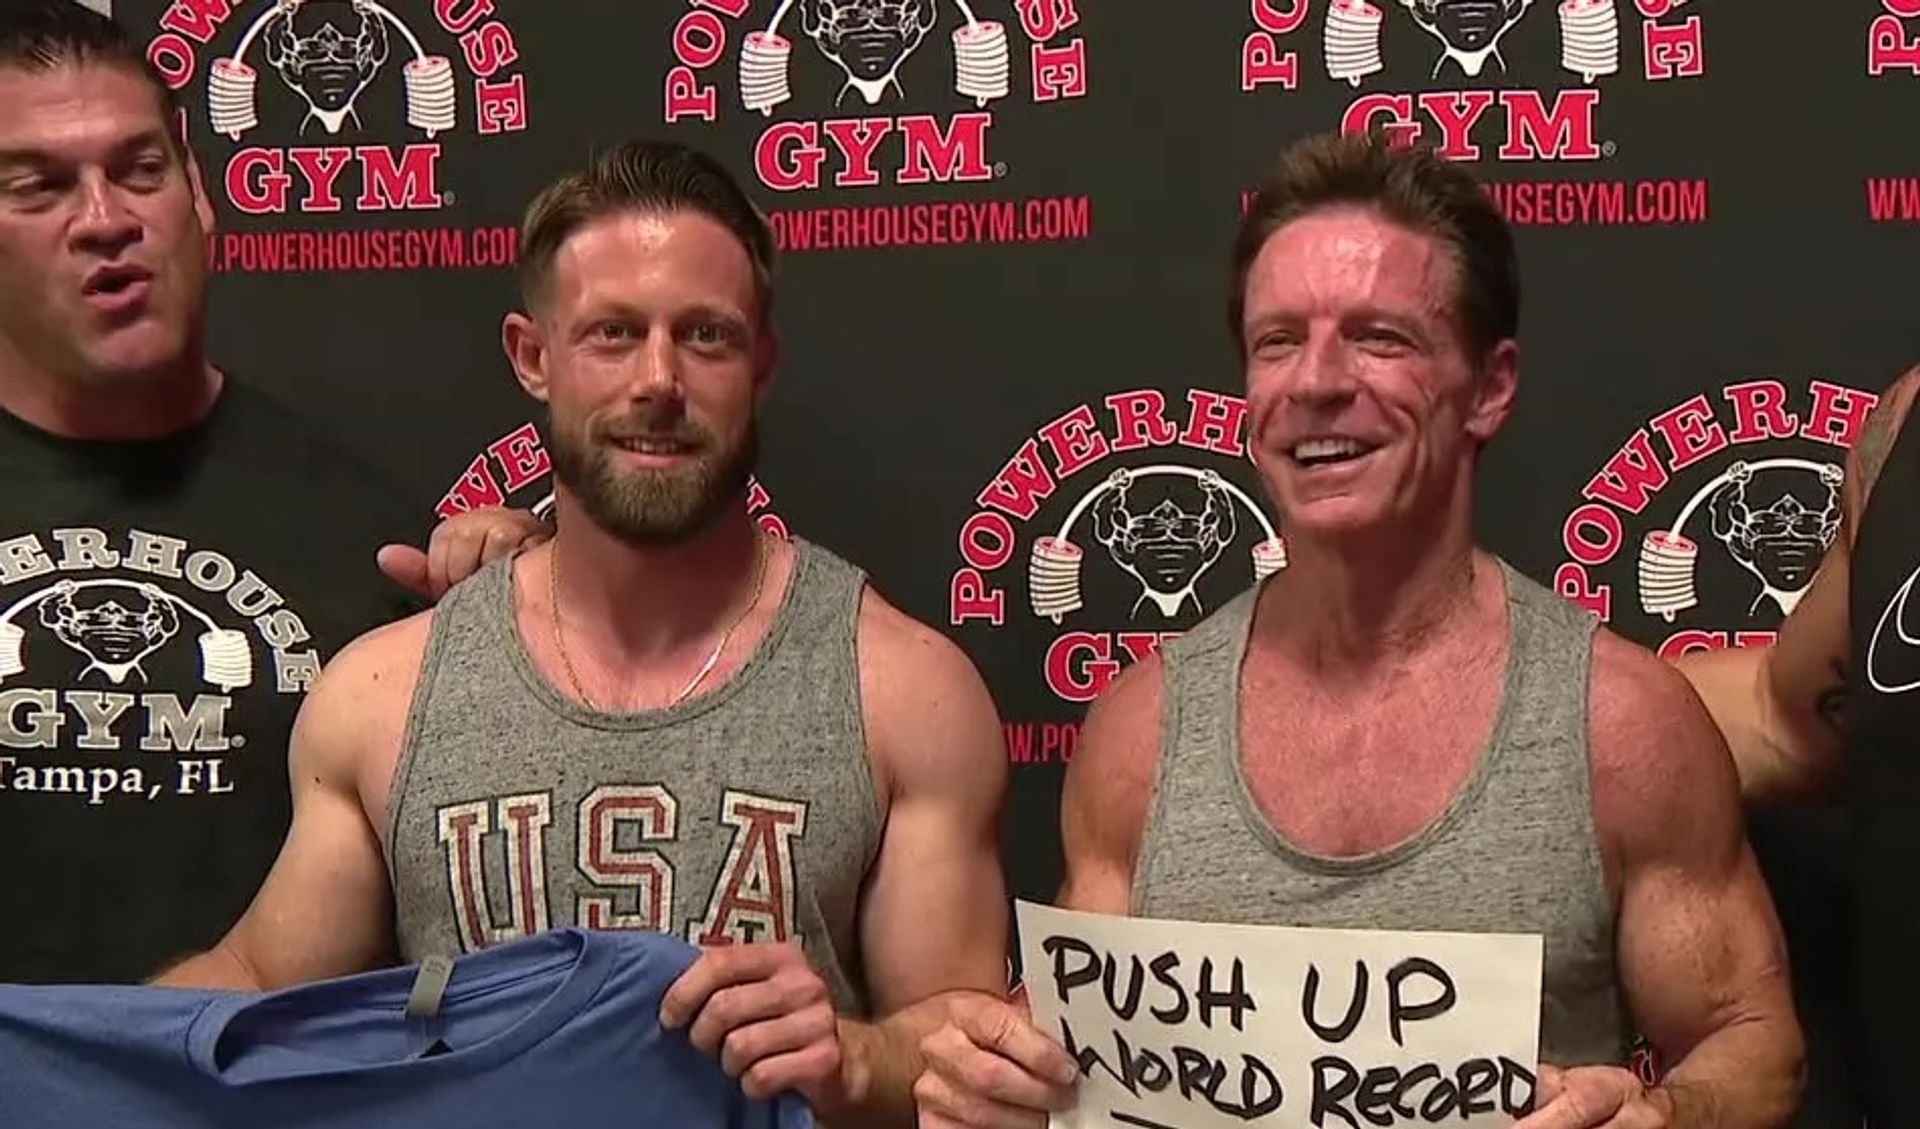 rob sterling wereldrecord push-ups